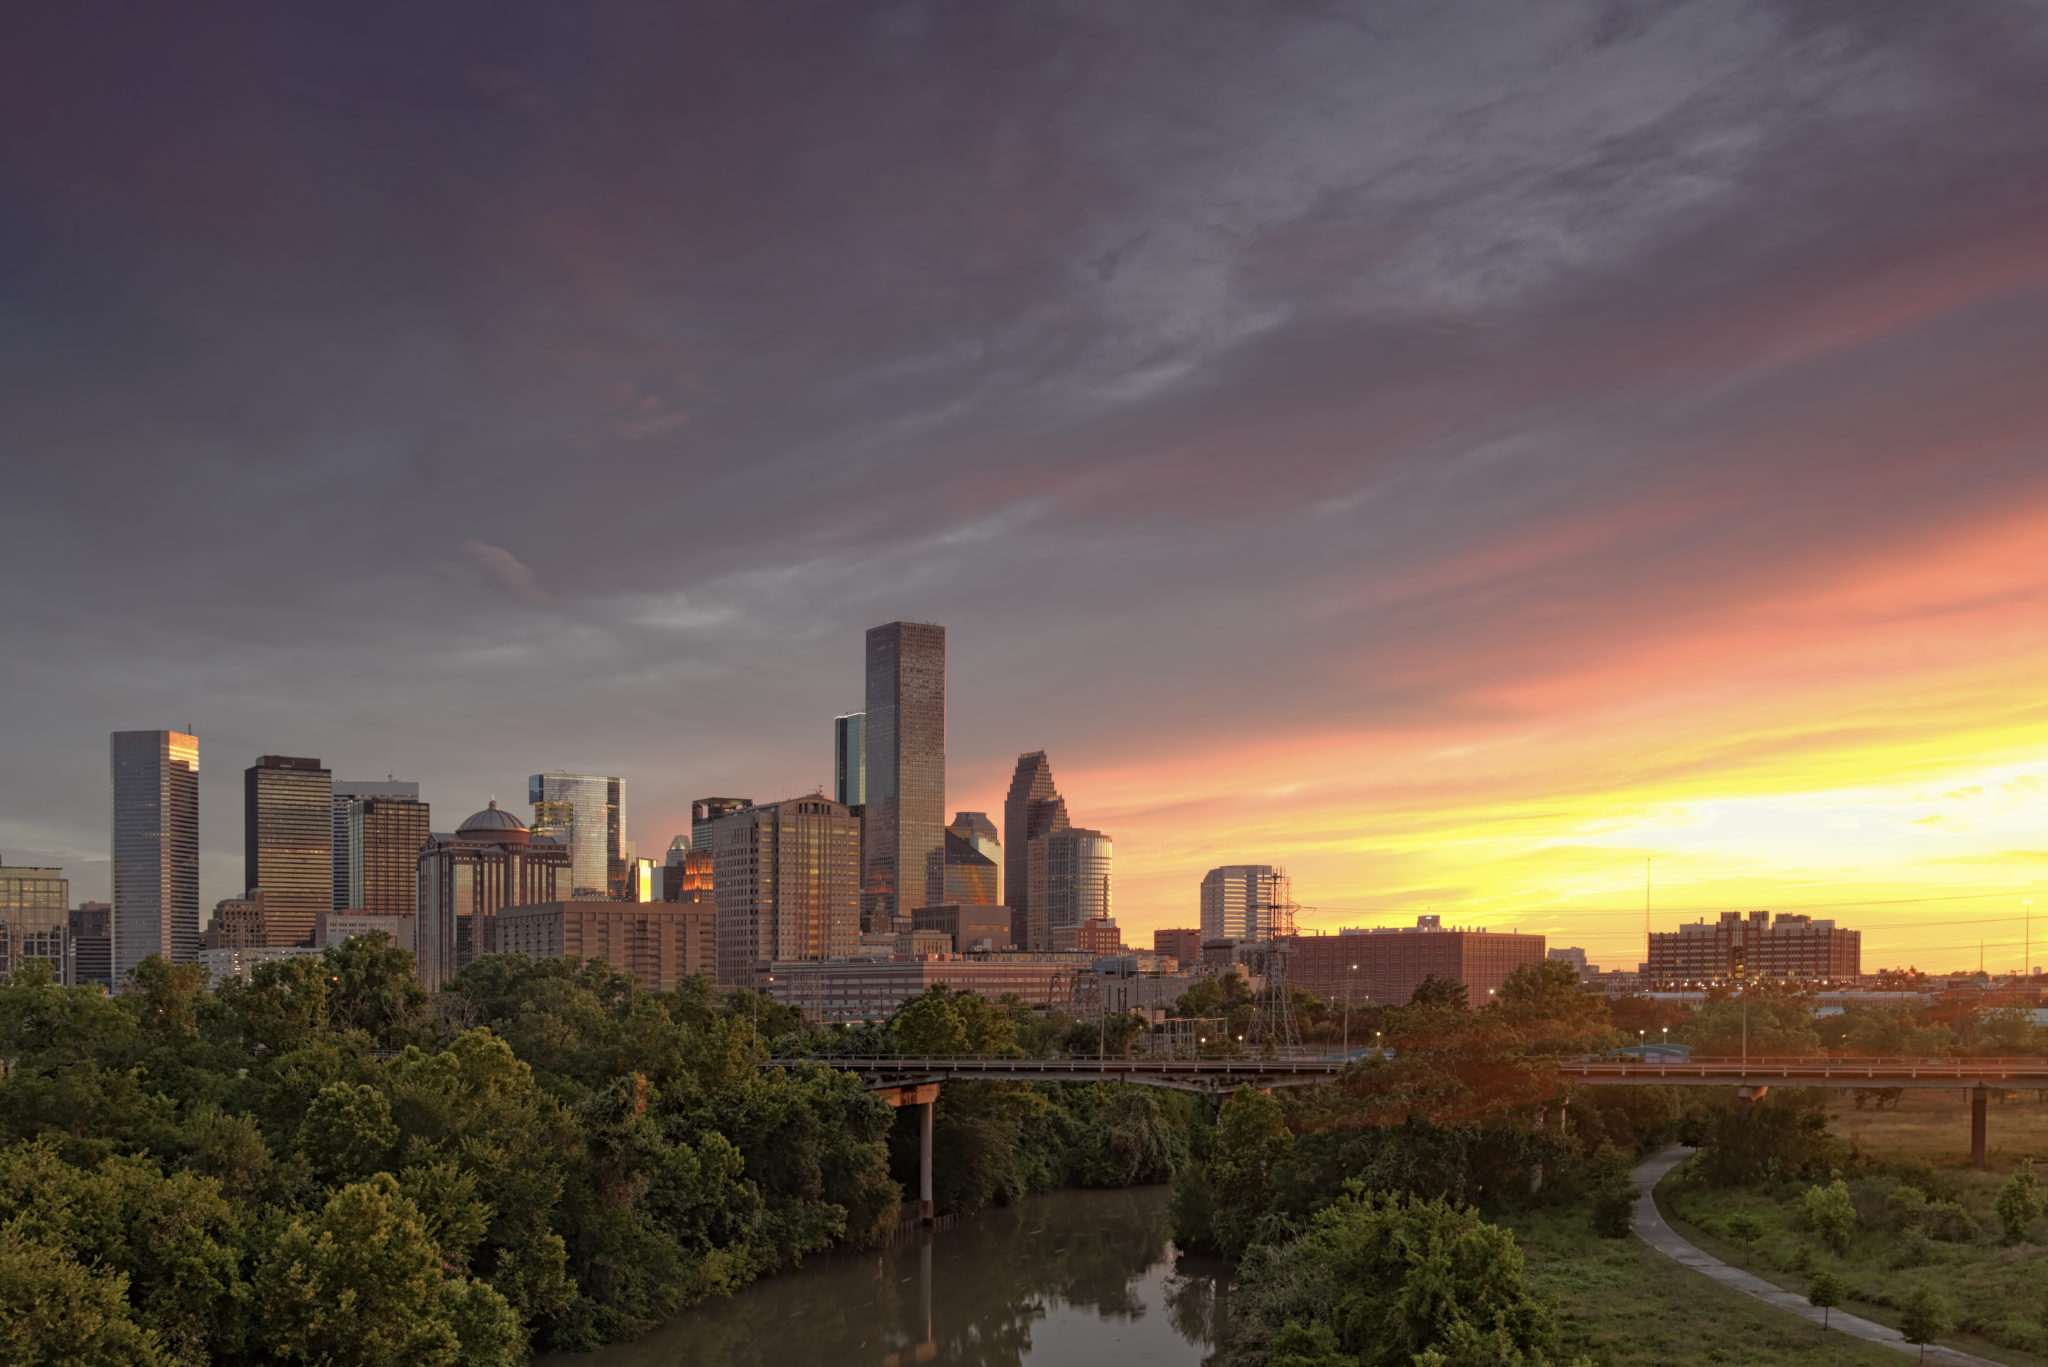 Houston skyline image via Shutterstock.